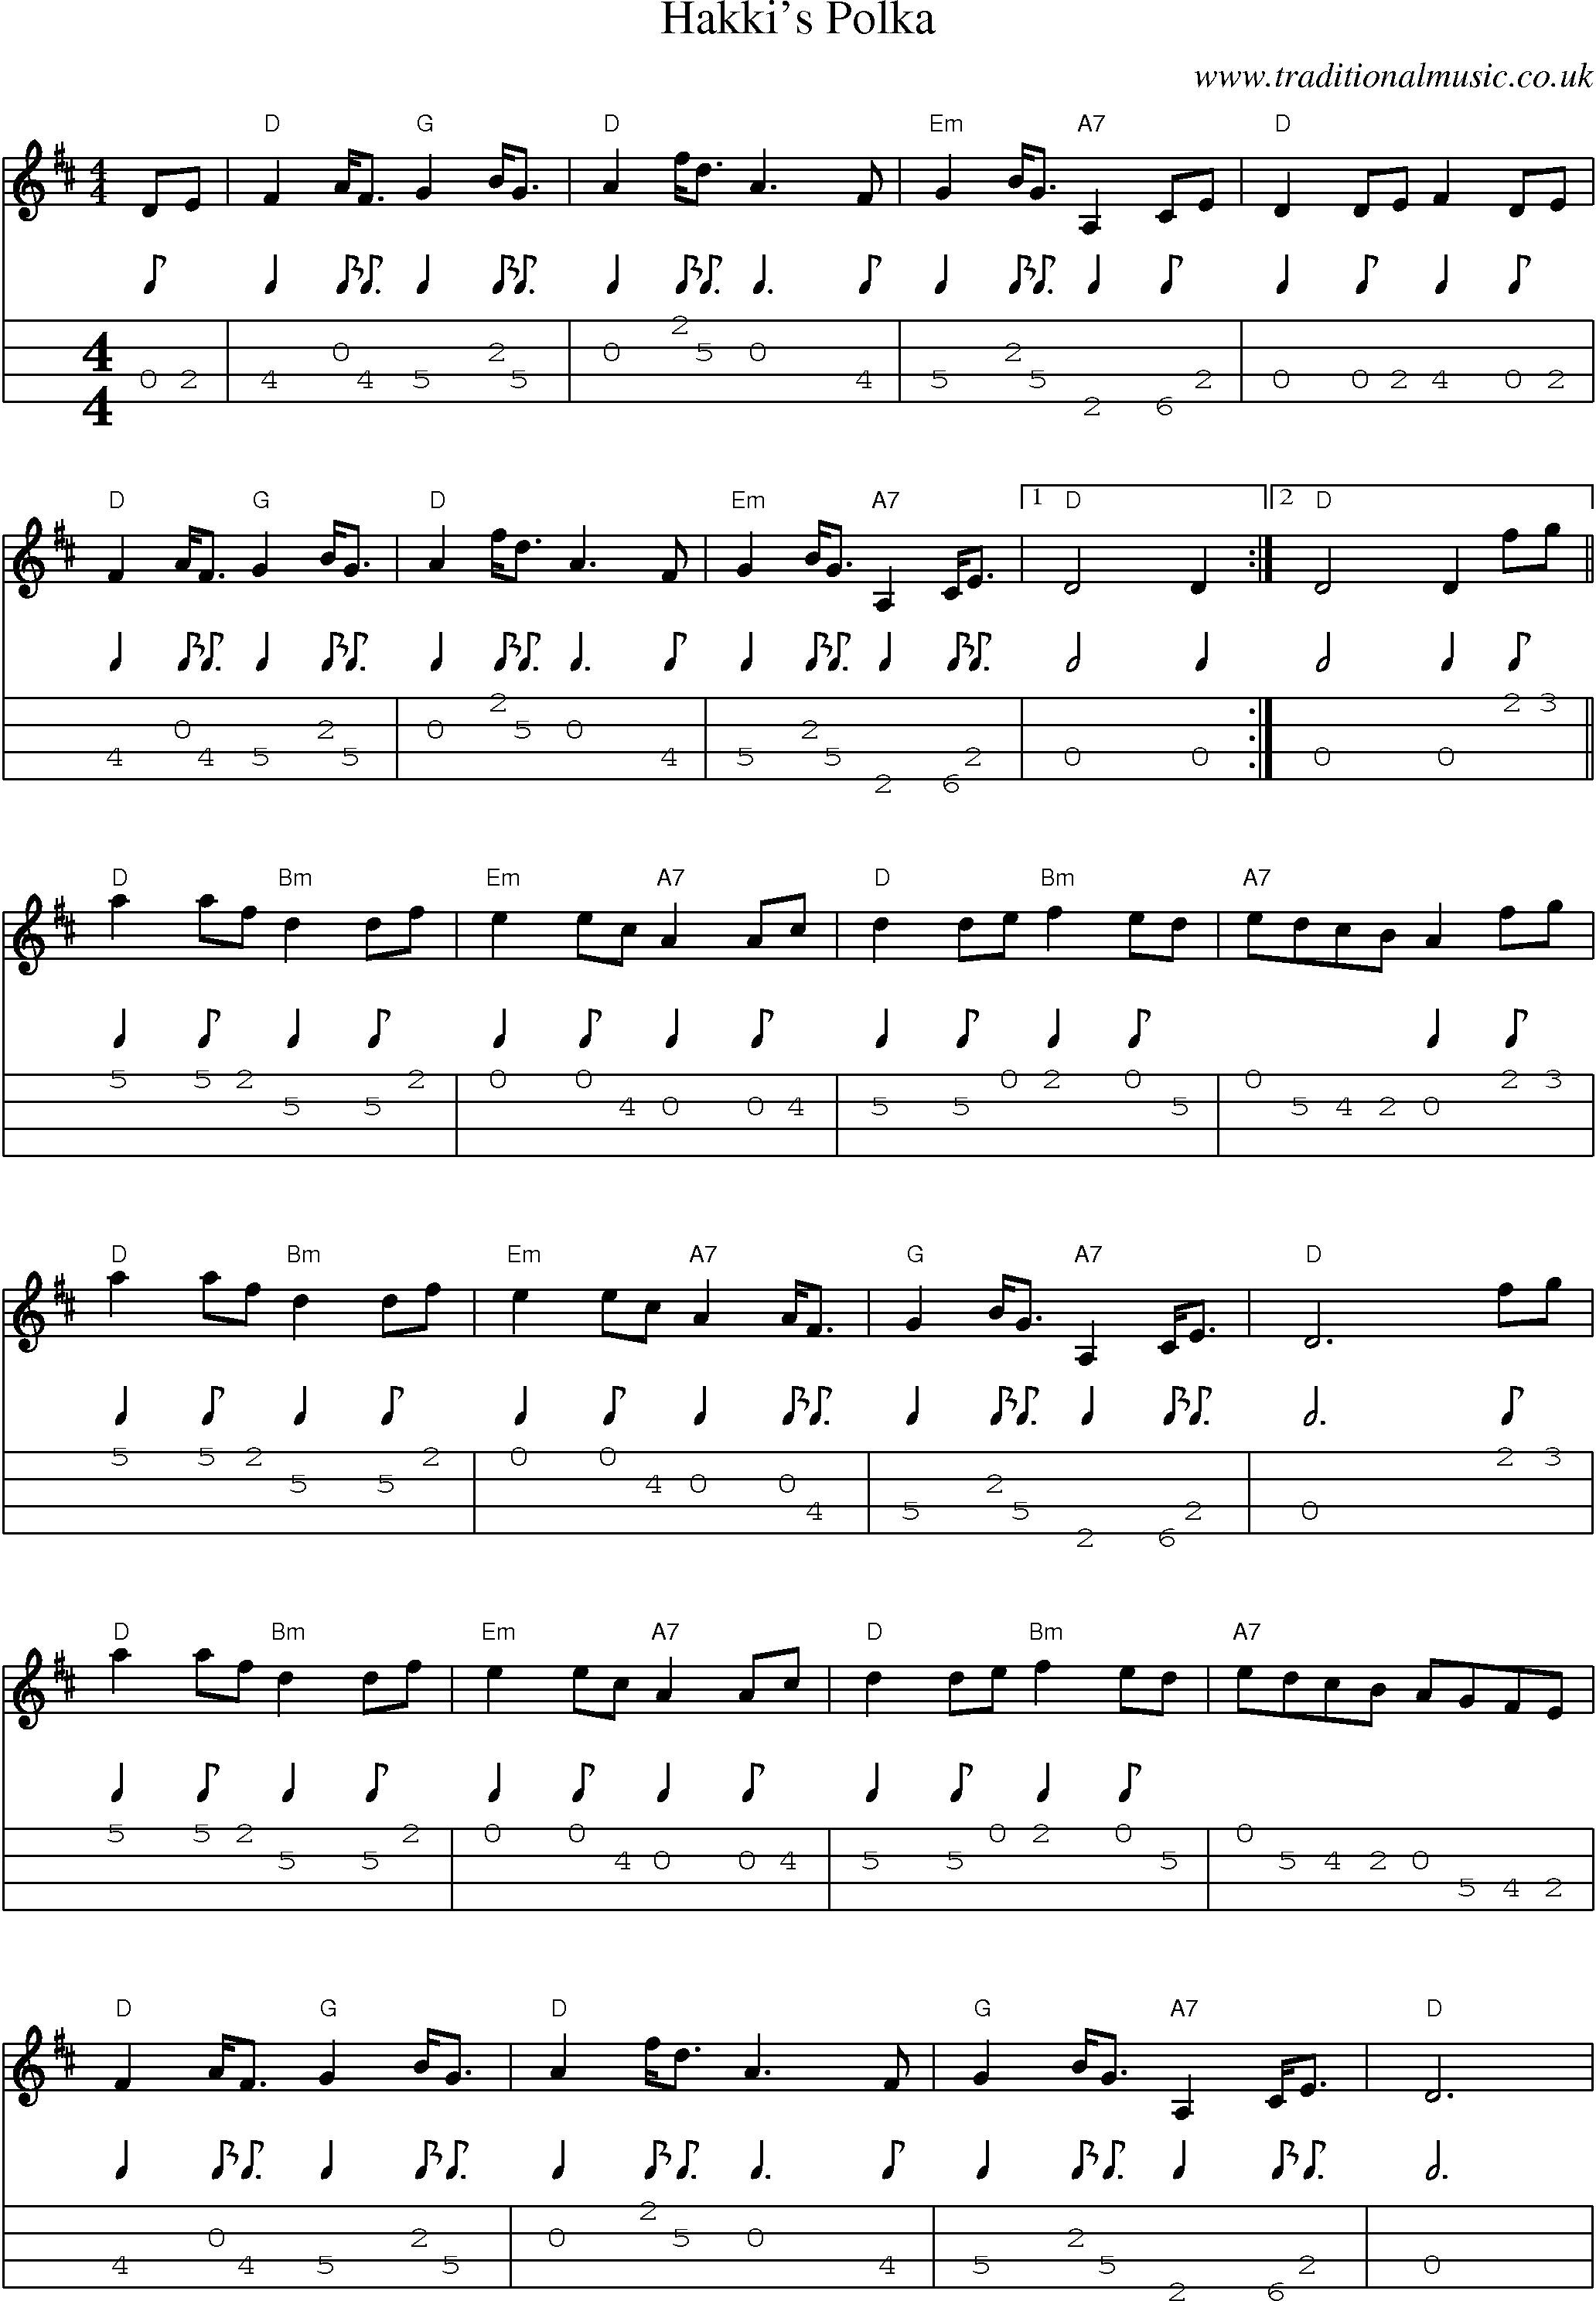 Music Score and Mandolin Tabs for Hakkis Polka